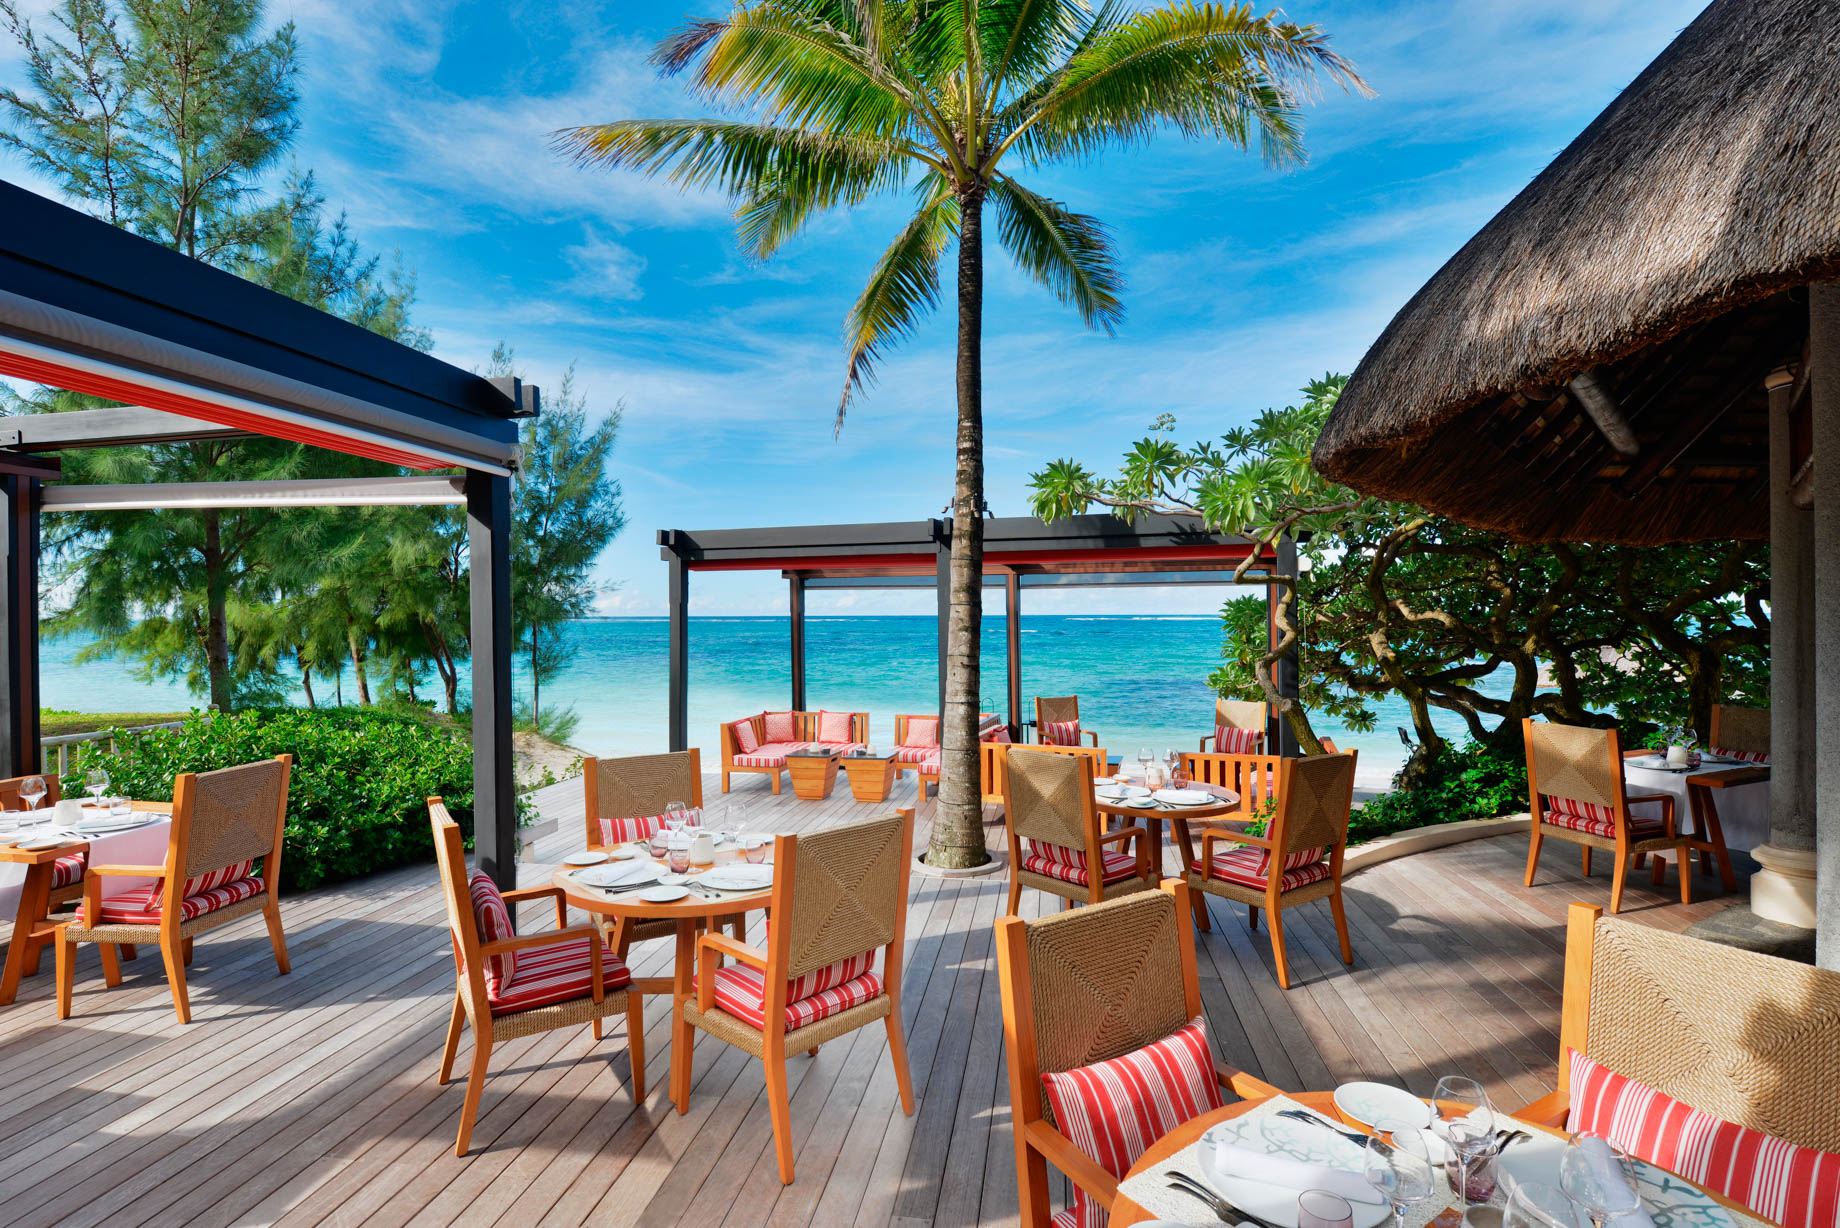 Constance Belle Mare Plage Resort - Mauritius - La Spiaggia Restaurant Patio